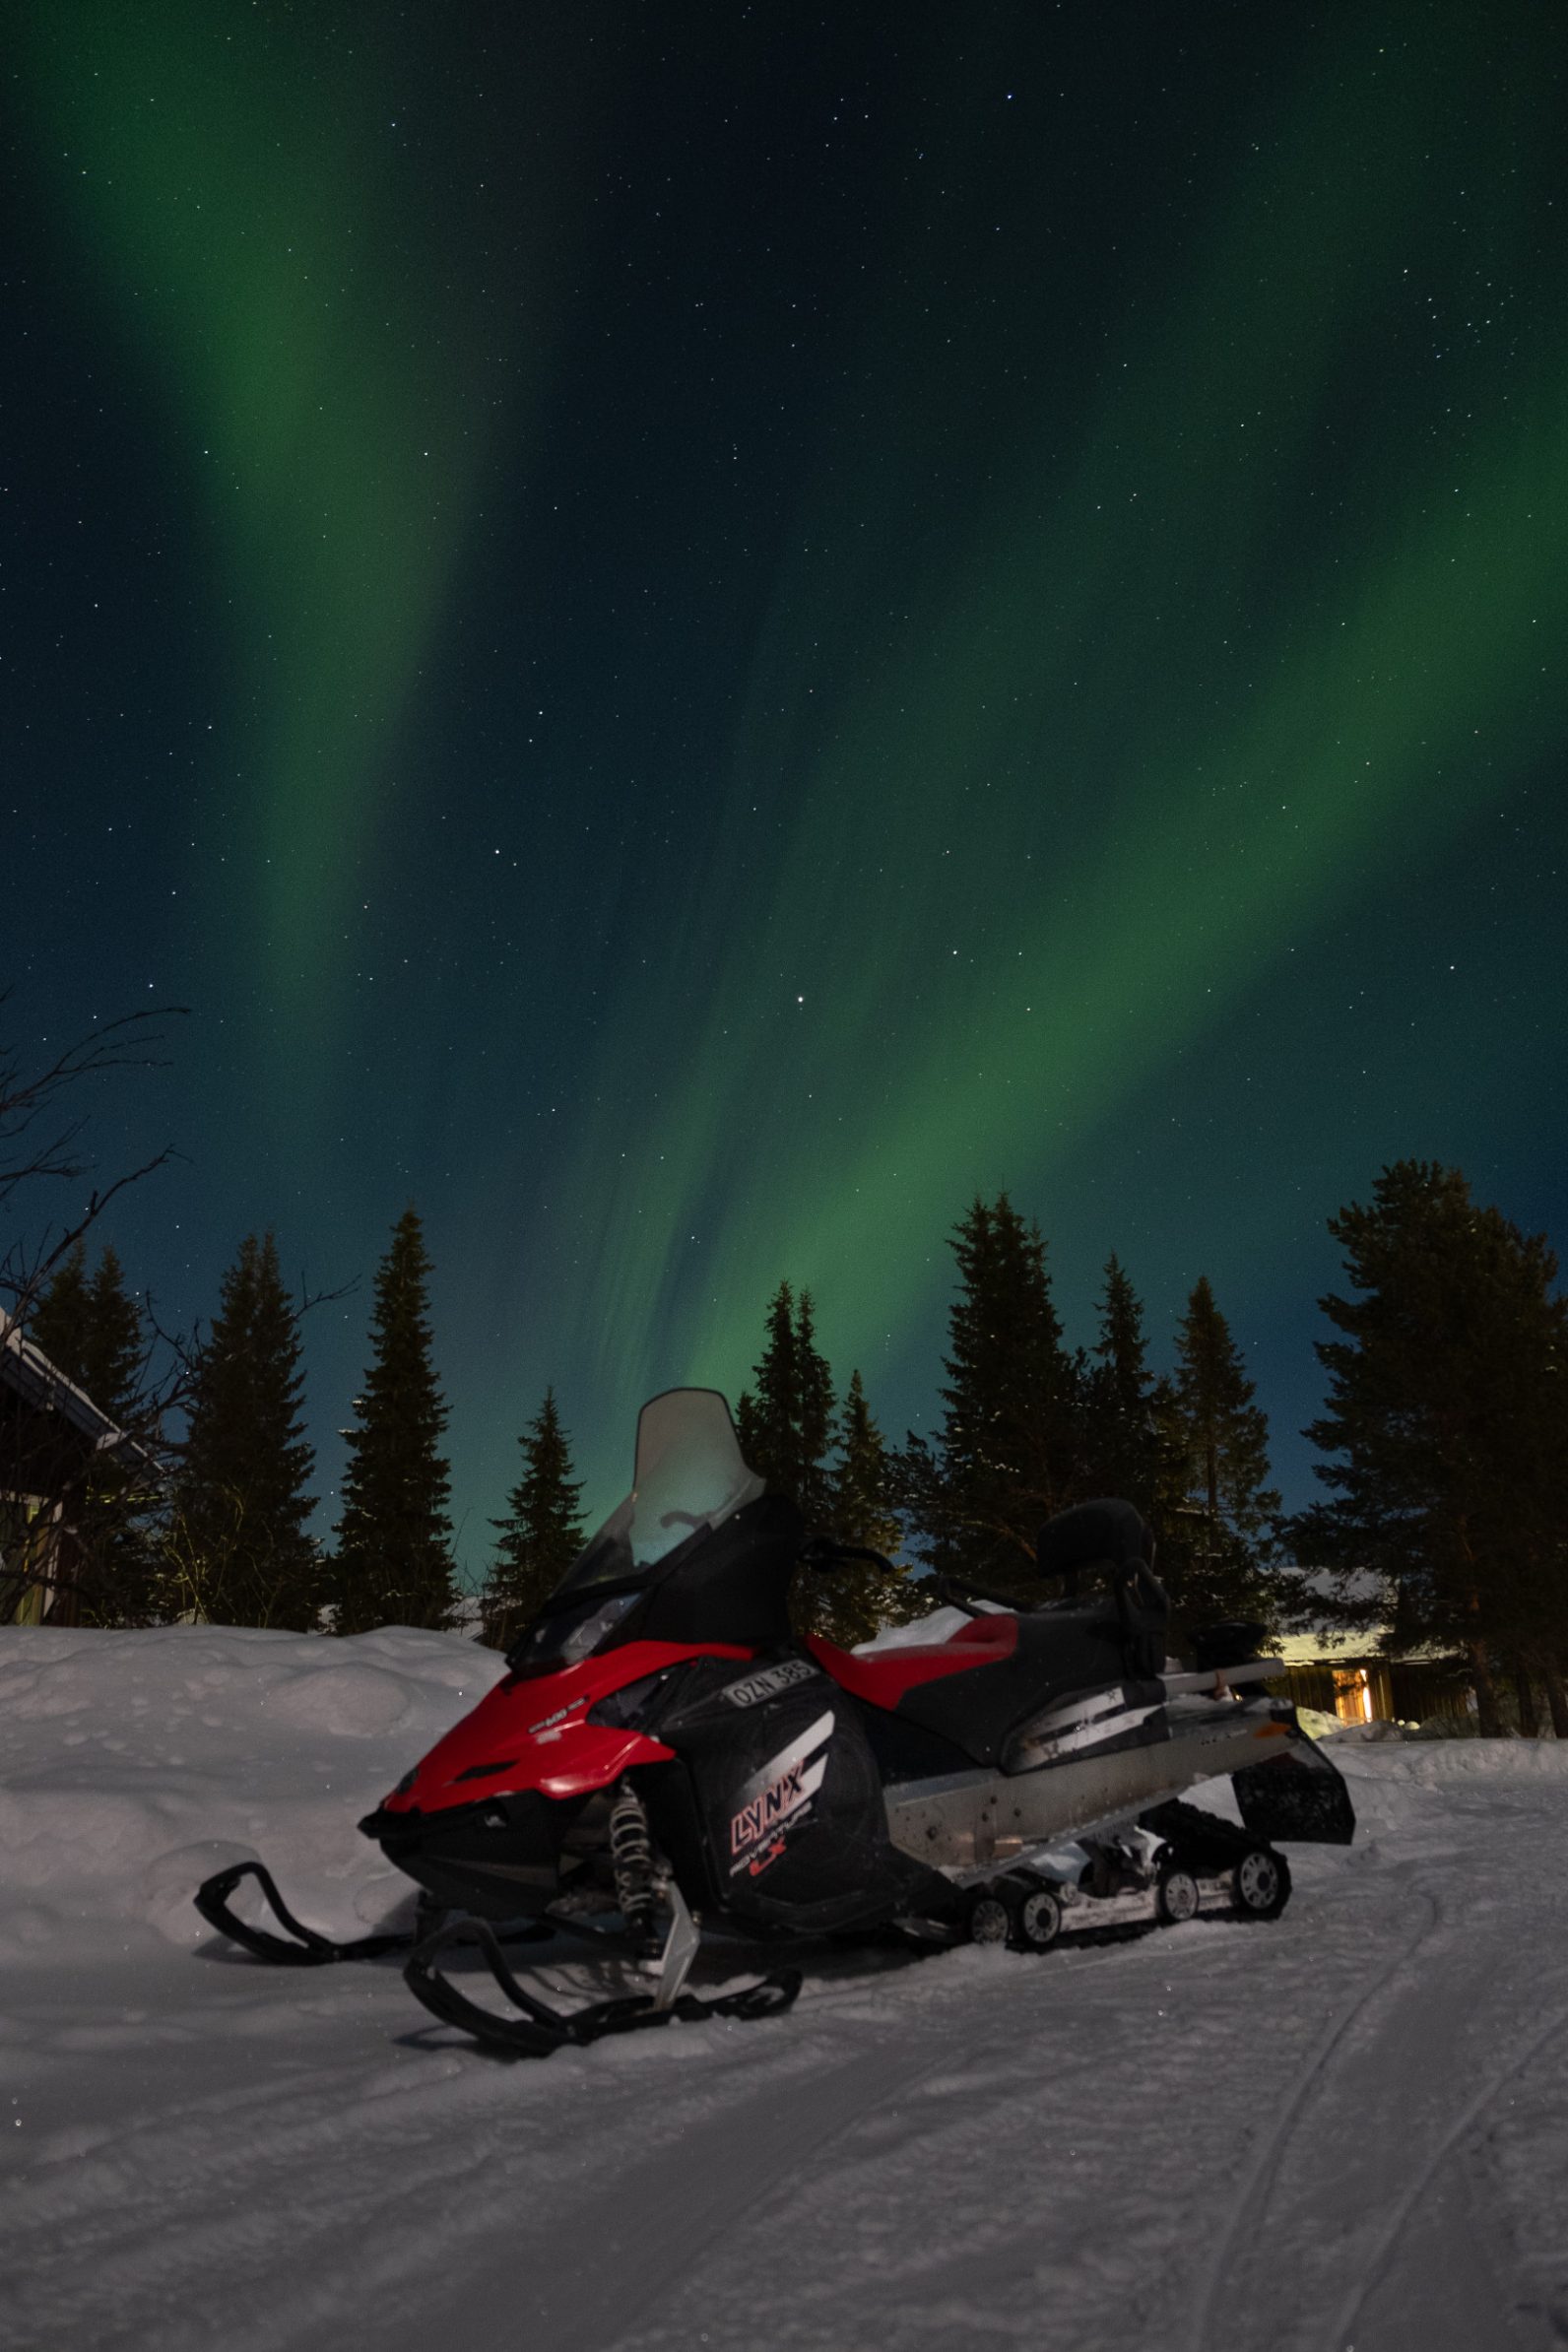 A Lynx petrol-powered snowmobile under the aurora borealis.